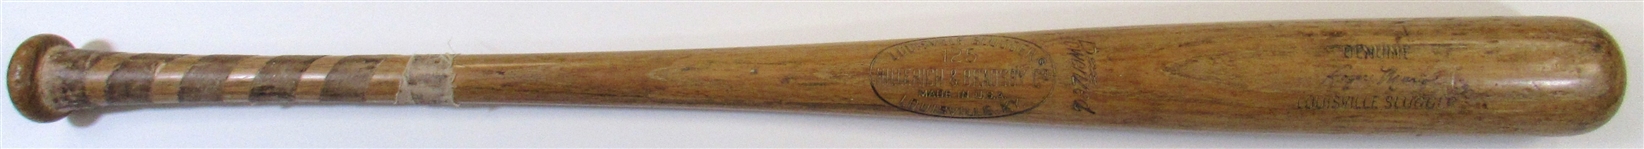 1967 Roger Maris GU Bat PSA 10 (World Series Bat)